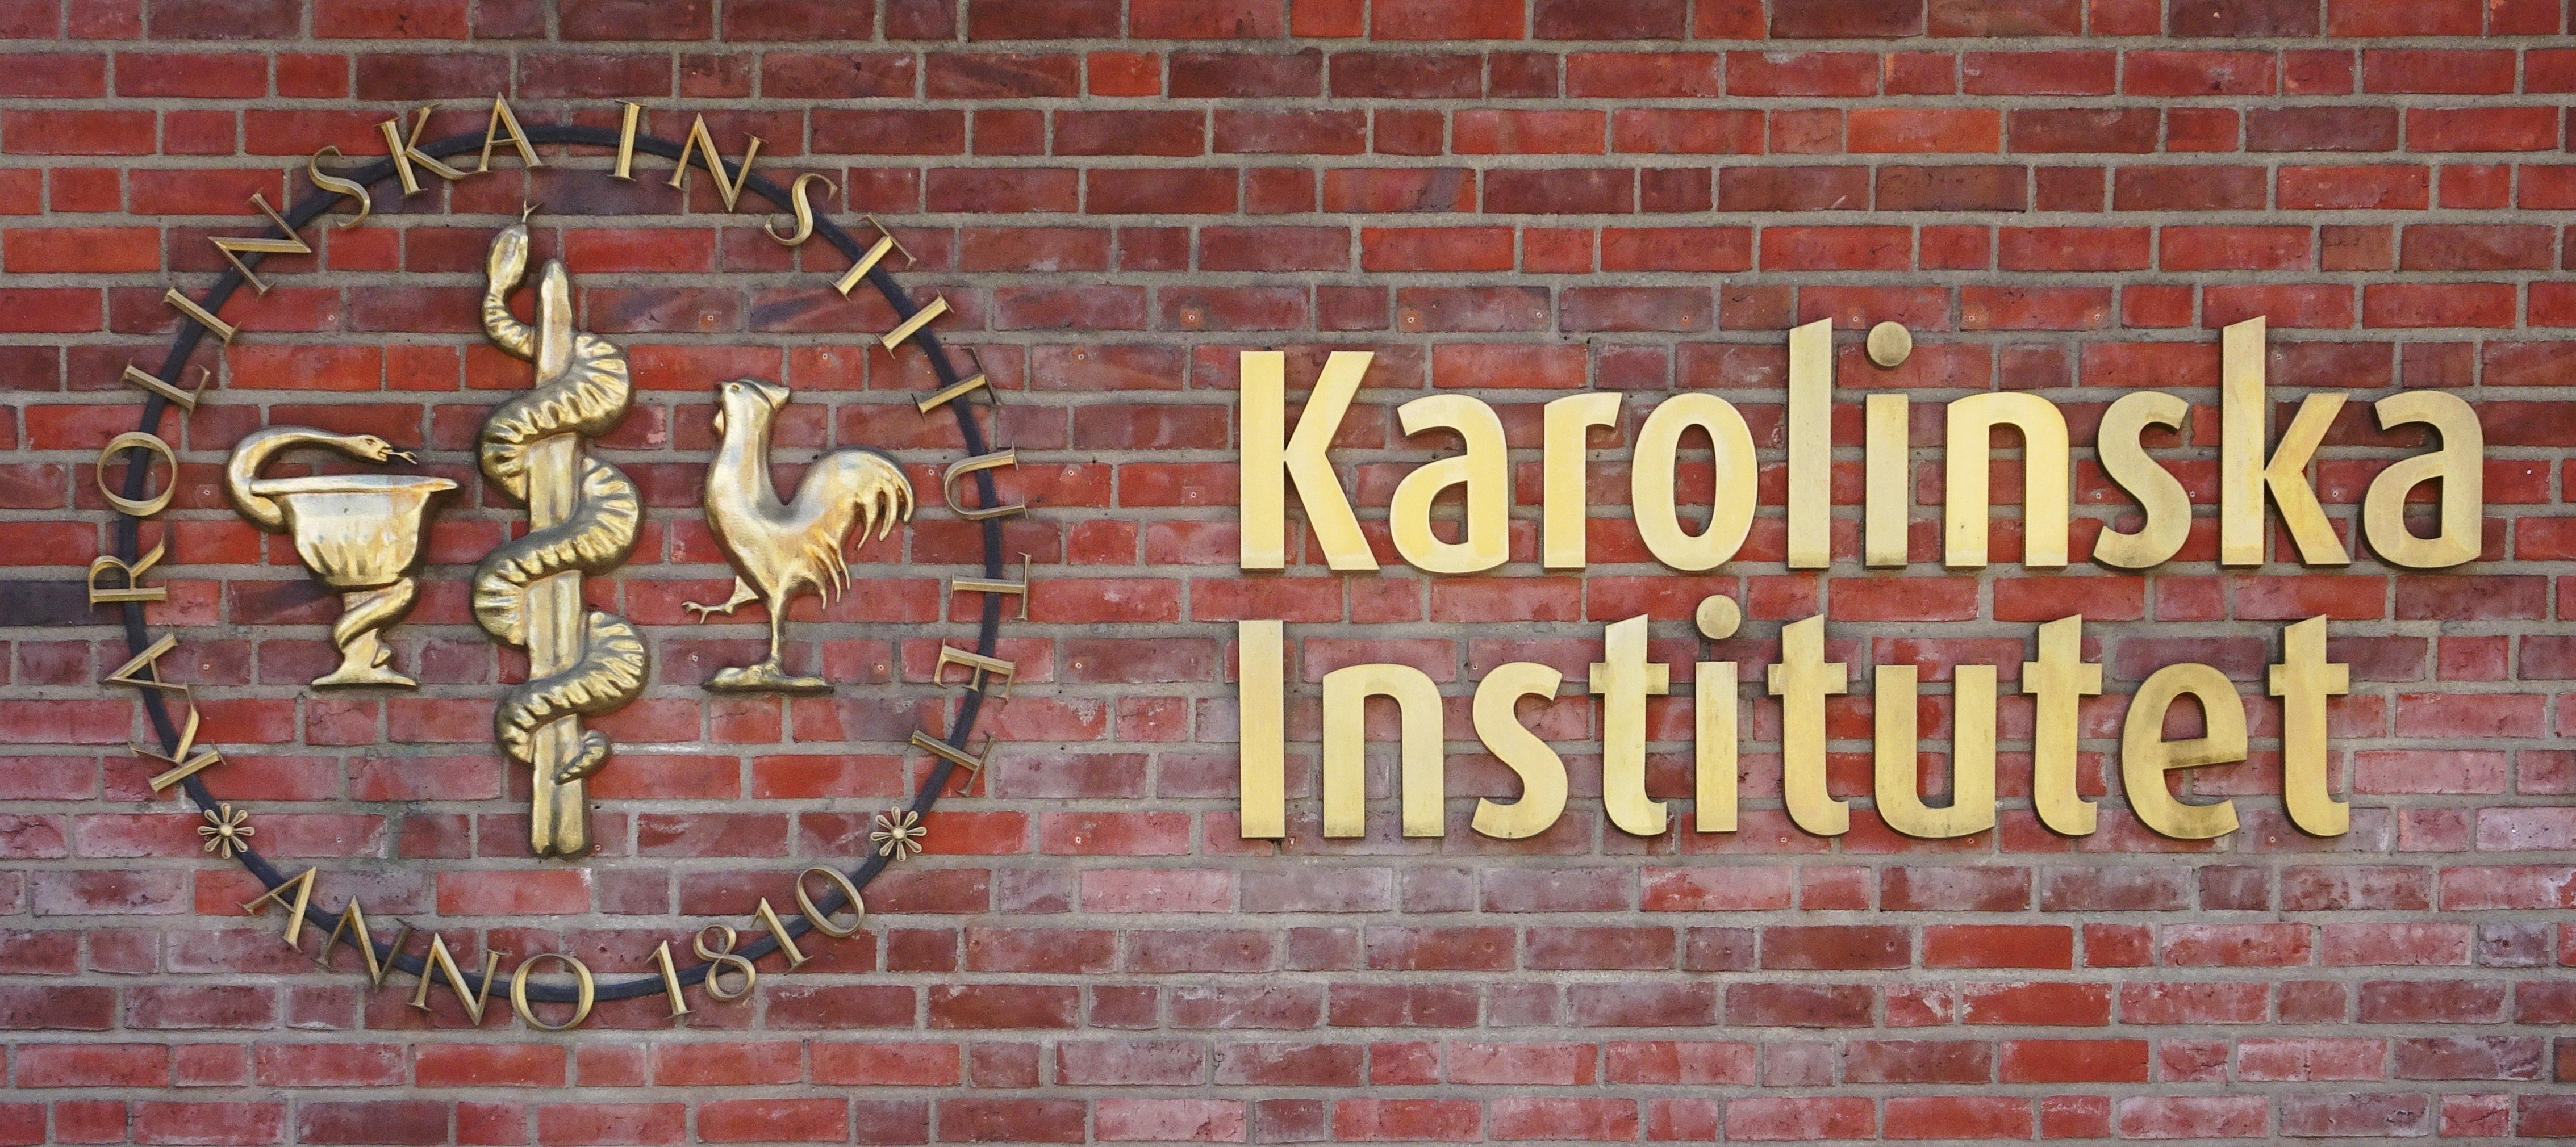 Karolinska Institutet – Wikipedia